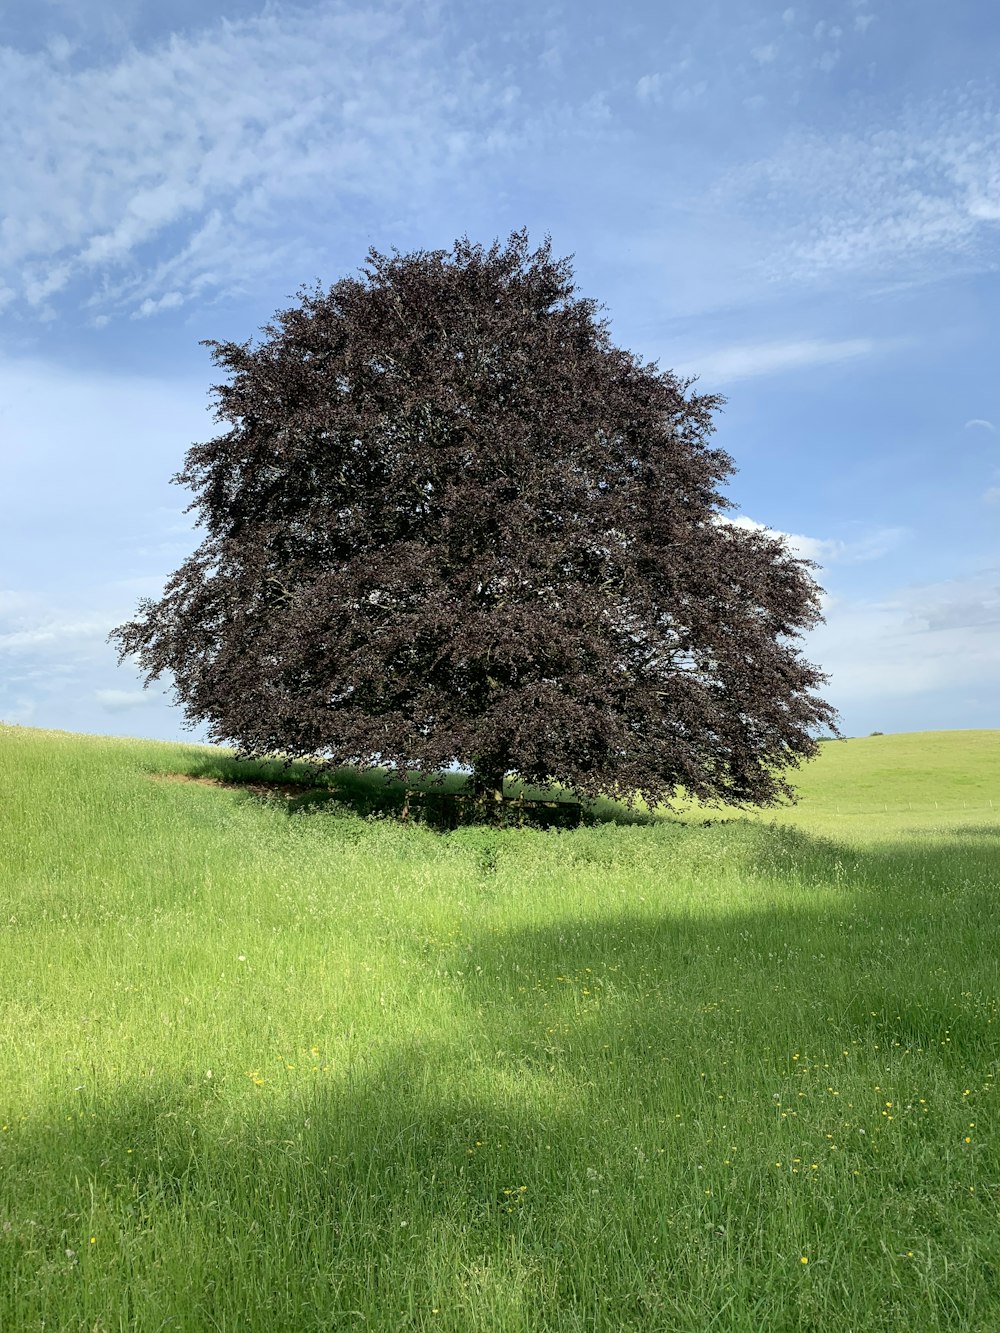 brauner Baum auf grünem Grasfeld unter blauem Himmel tagsüber